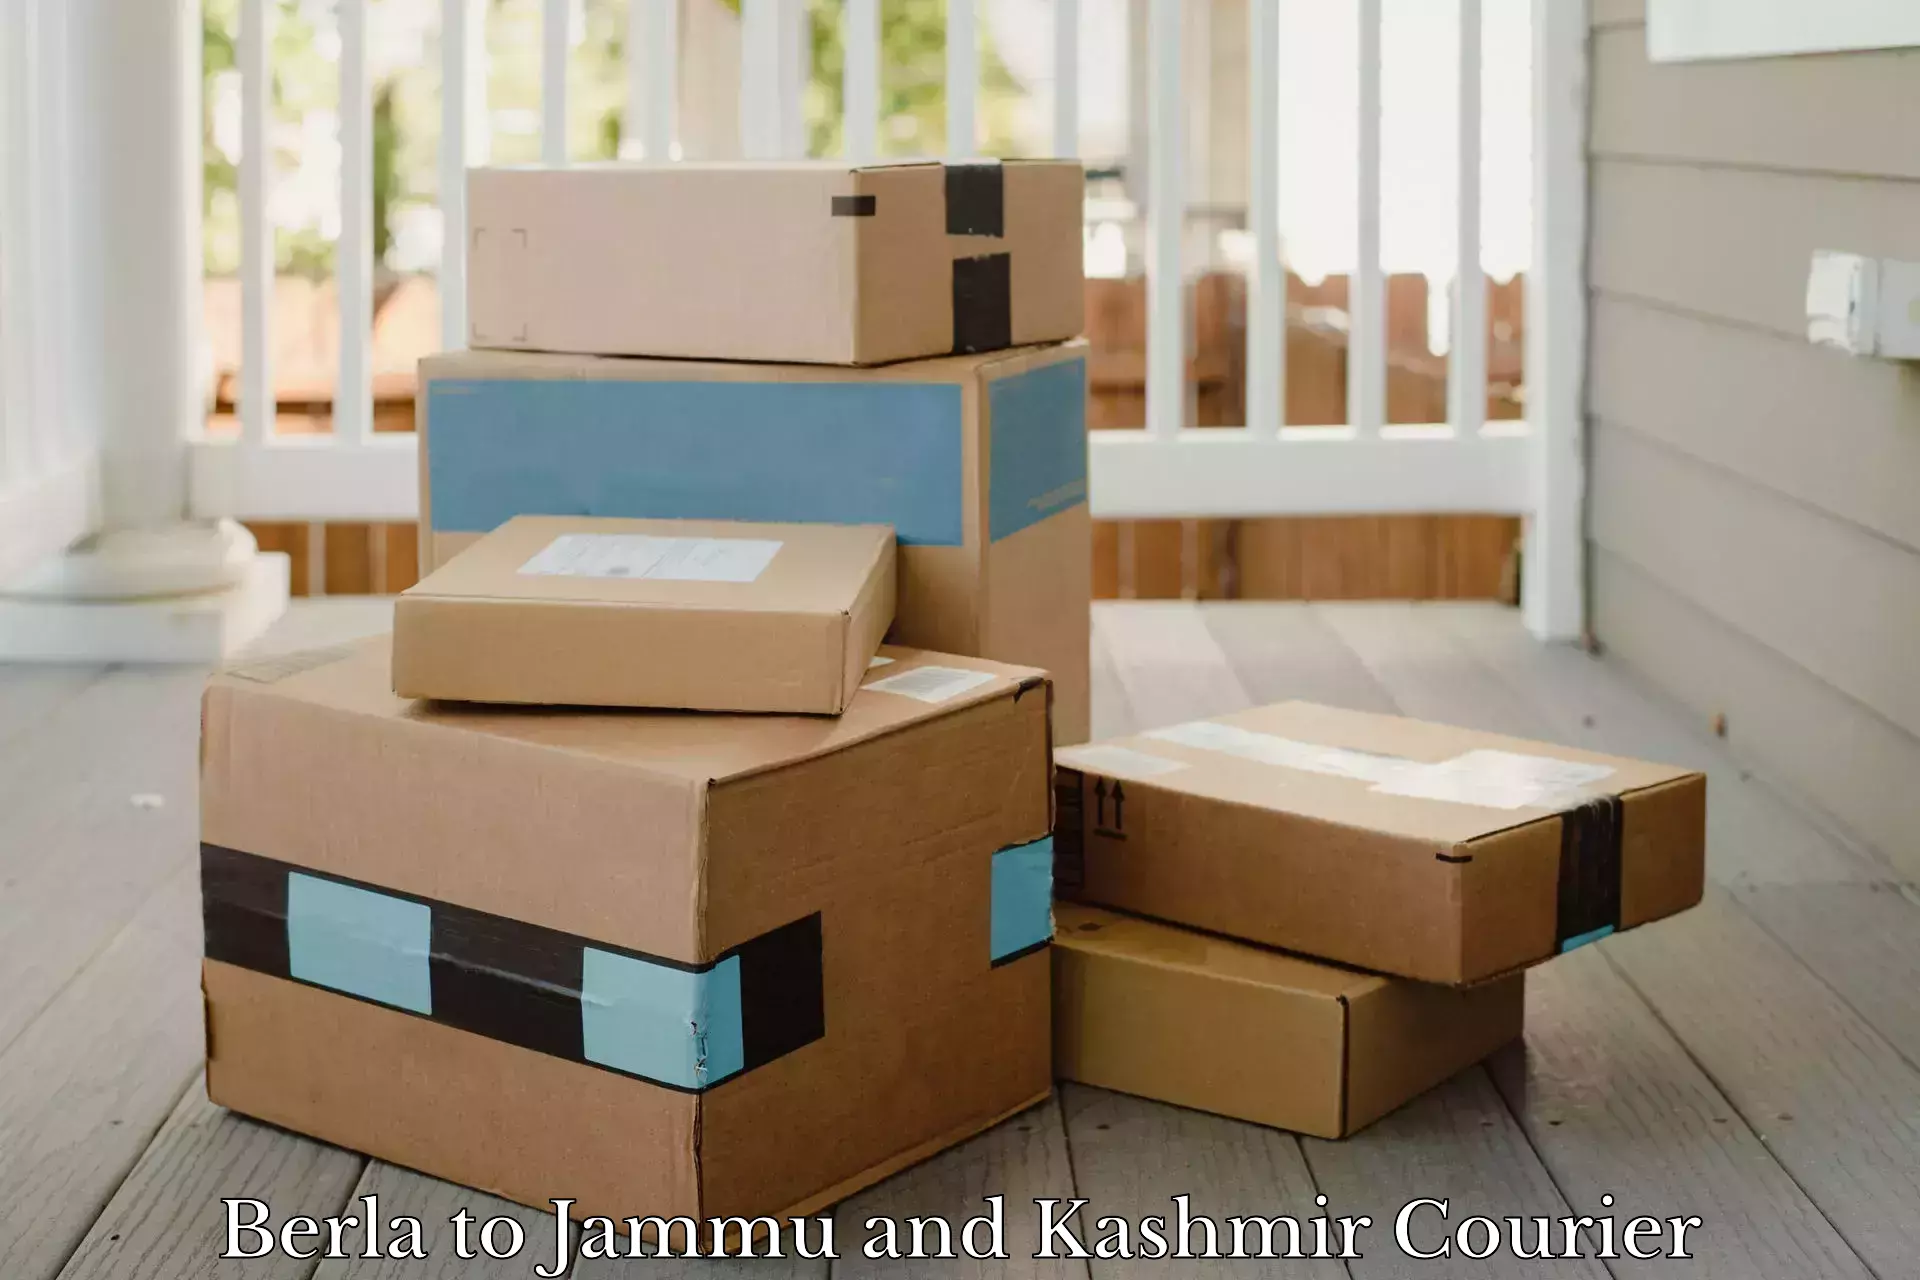 Round-the-clock parcel delivery Berla to Srinagar Kashmir